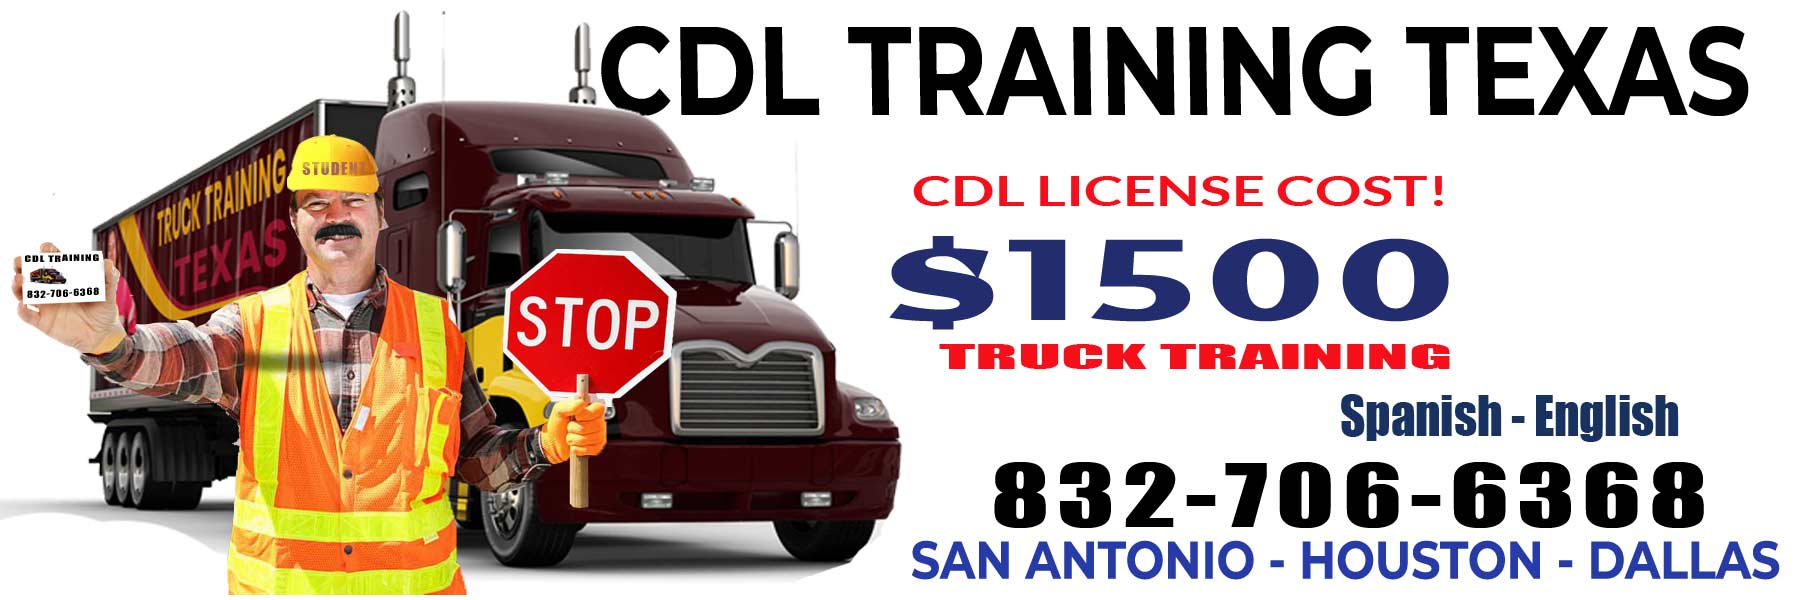 CDL School San Antonio TX, Truck Driving Training San Antonio, TX $1500